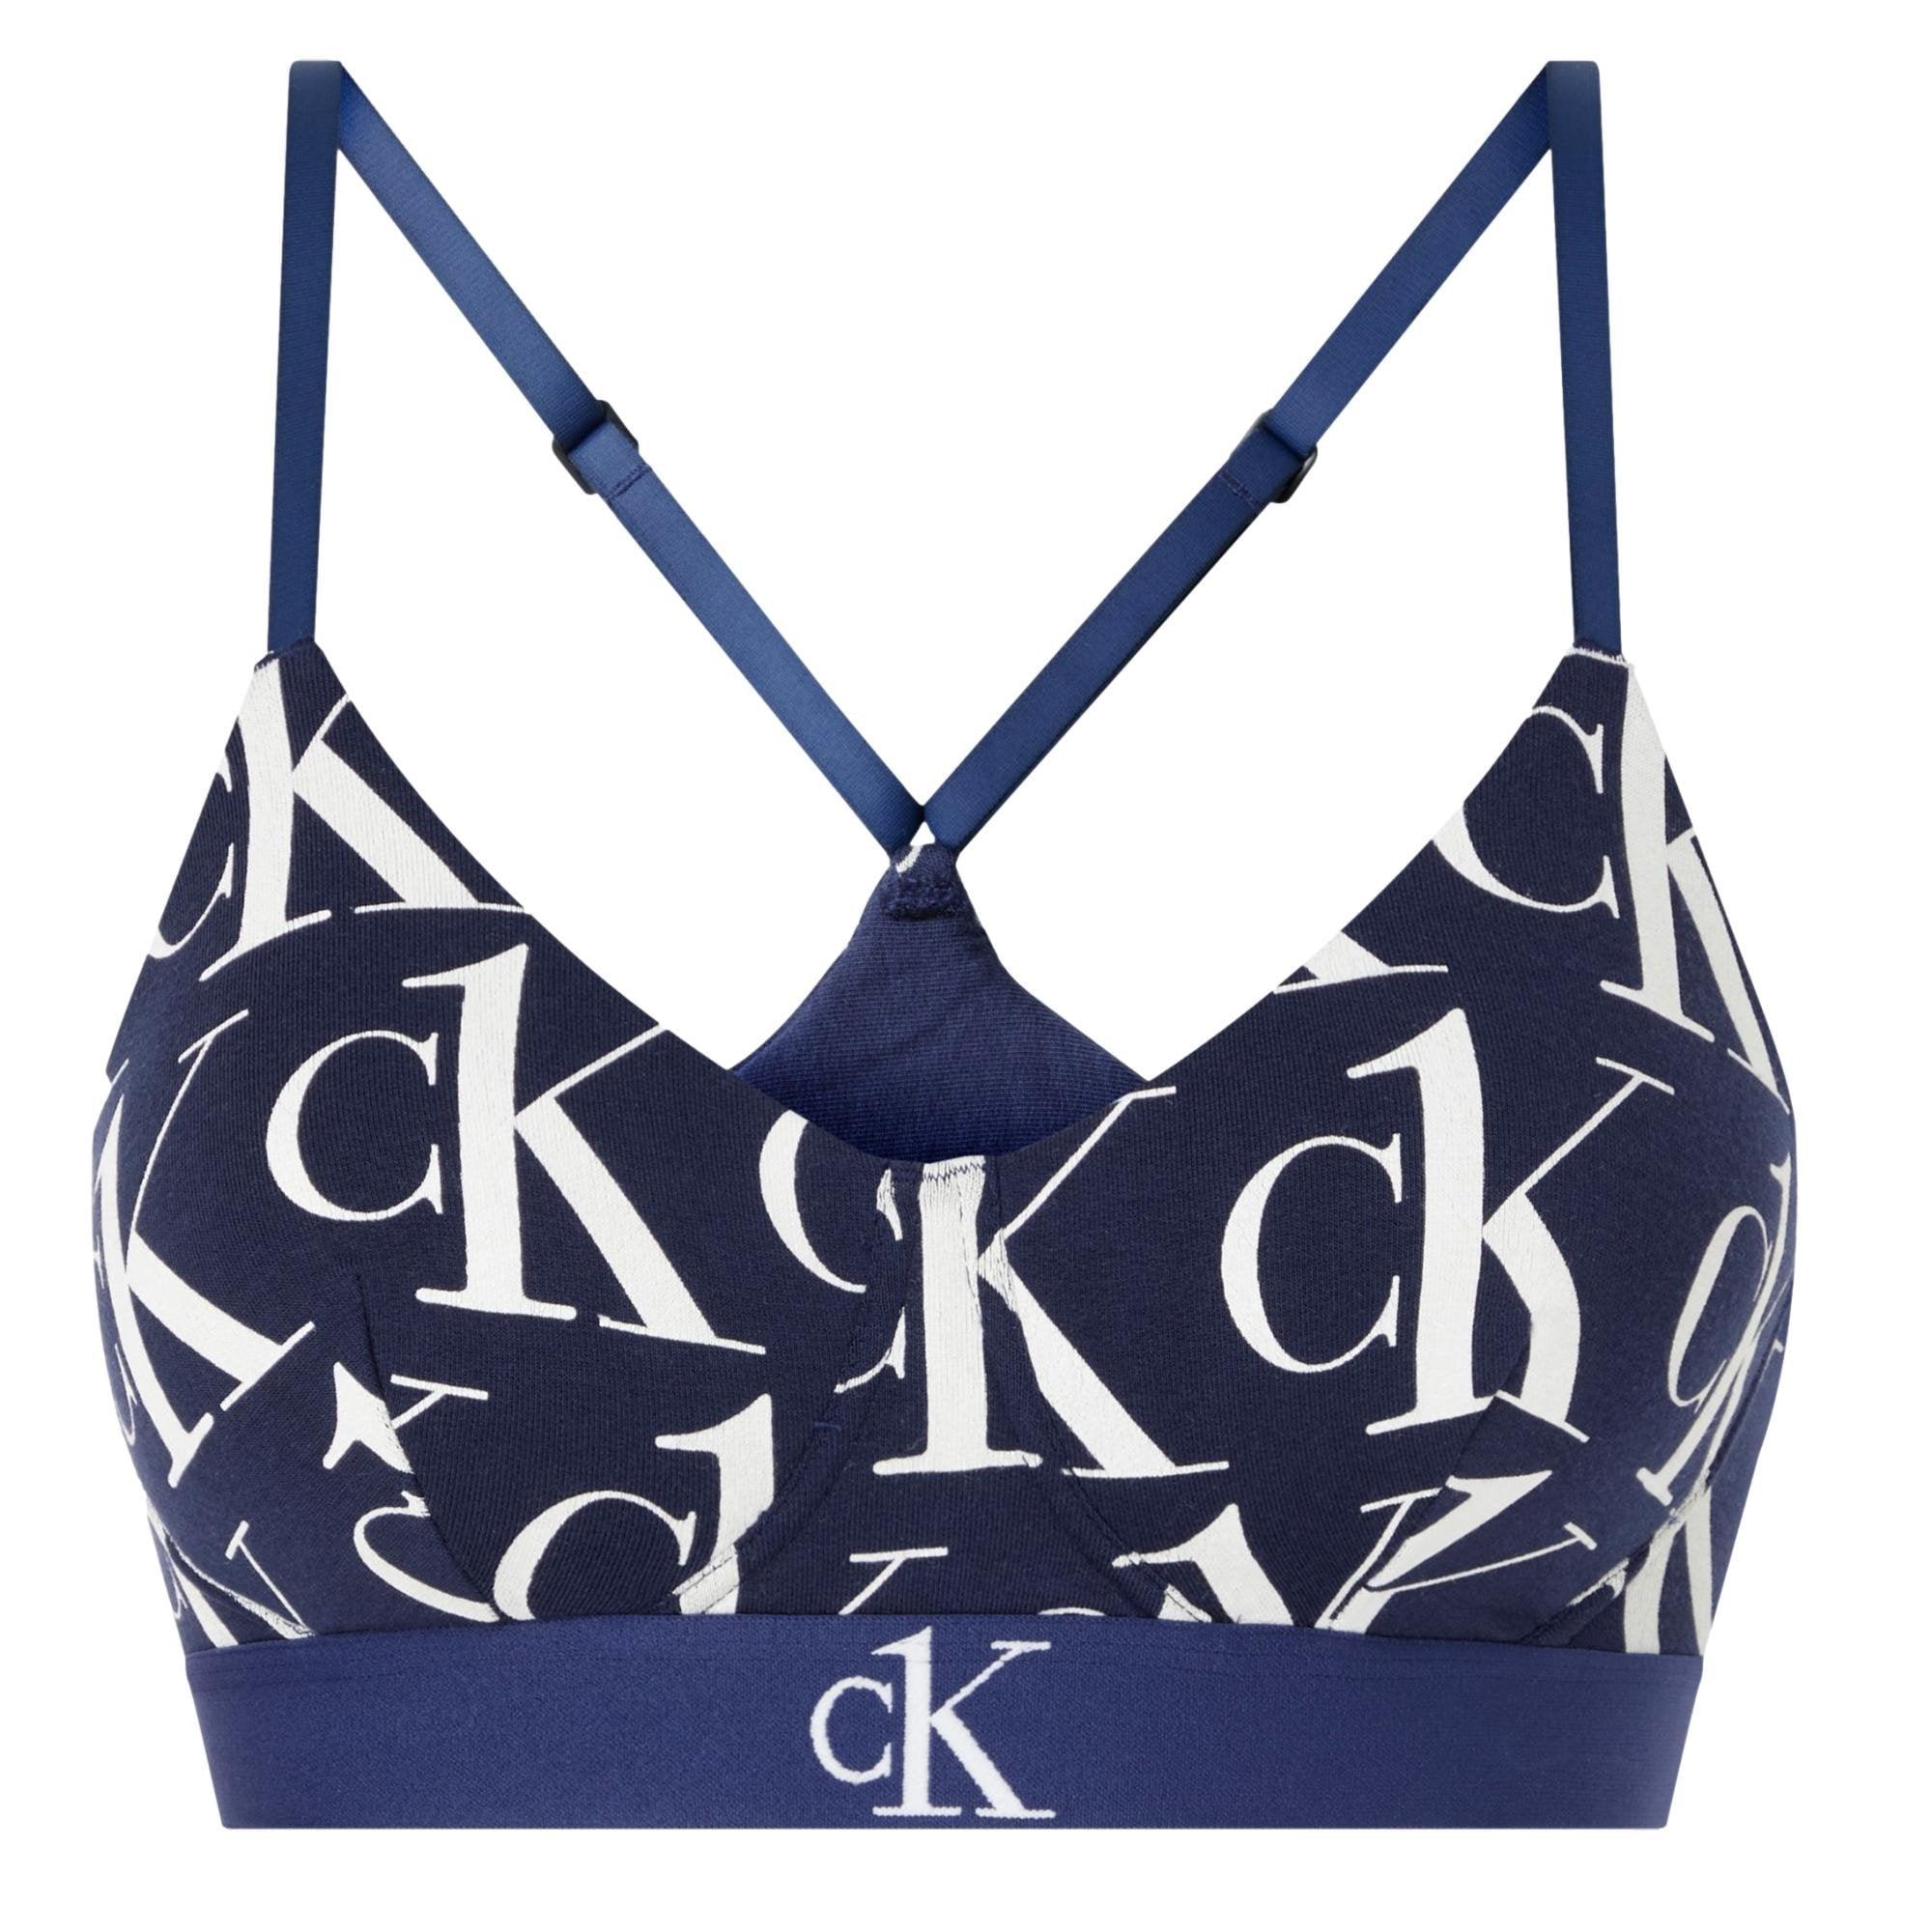 Calvin Klein CK One logo unlined triangle bralette in blue logo print